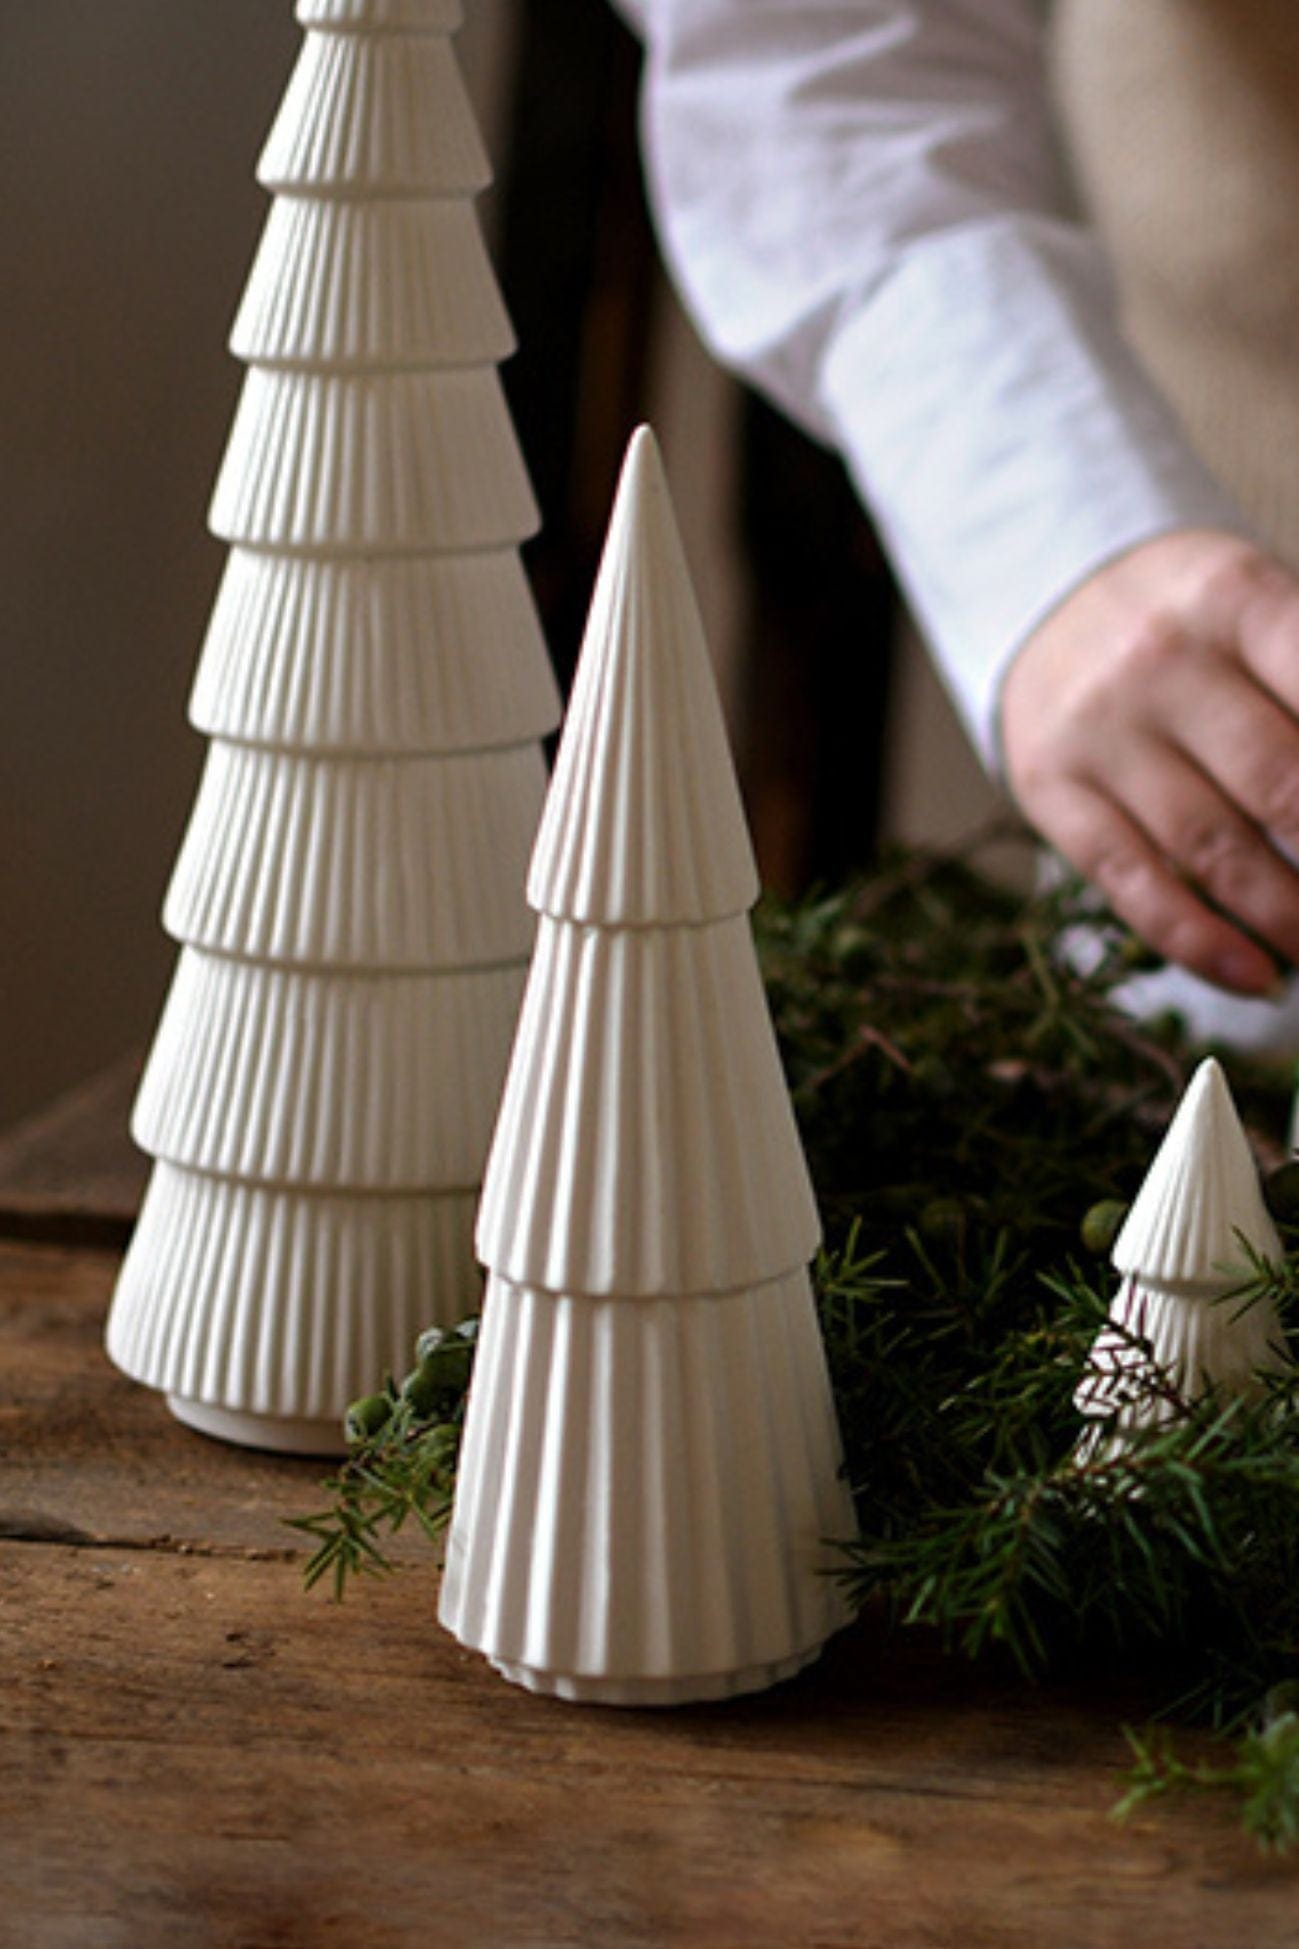 Storefactory Scandinavia Grandalen Grandalen - Albero di Natale in ceramica opaca bianca | Storefactory Scandinavia